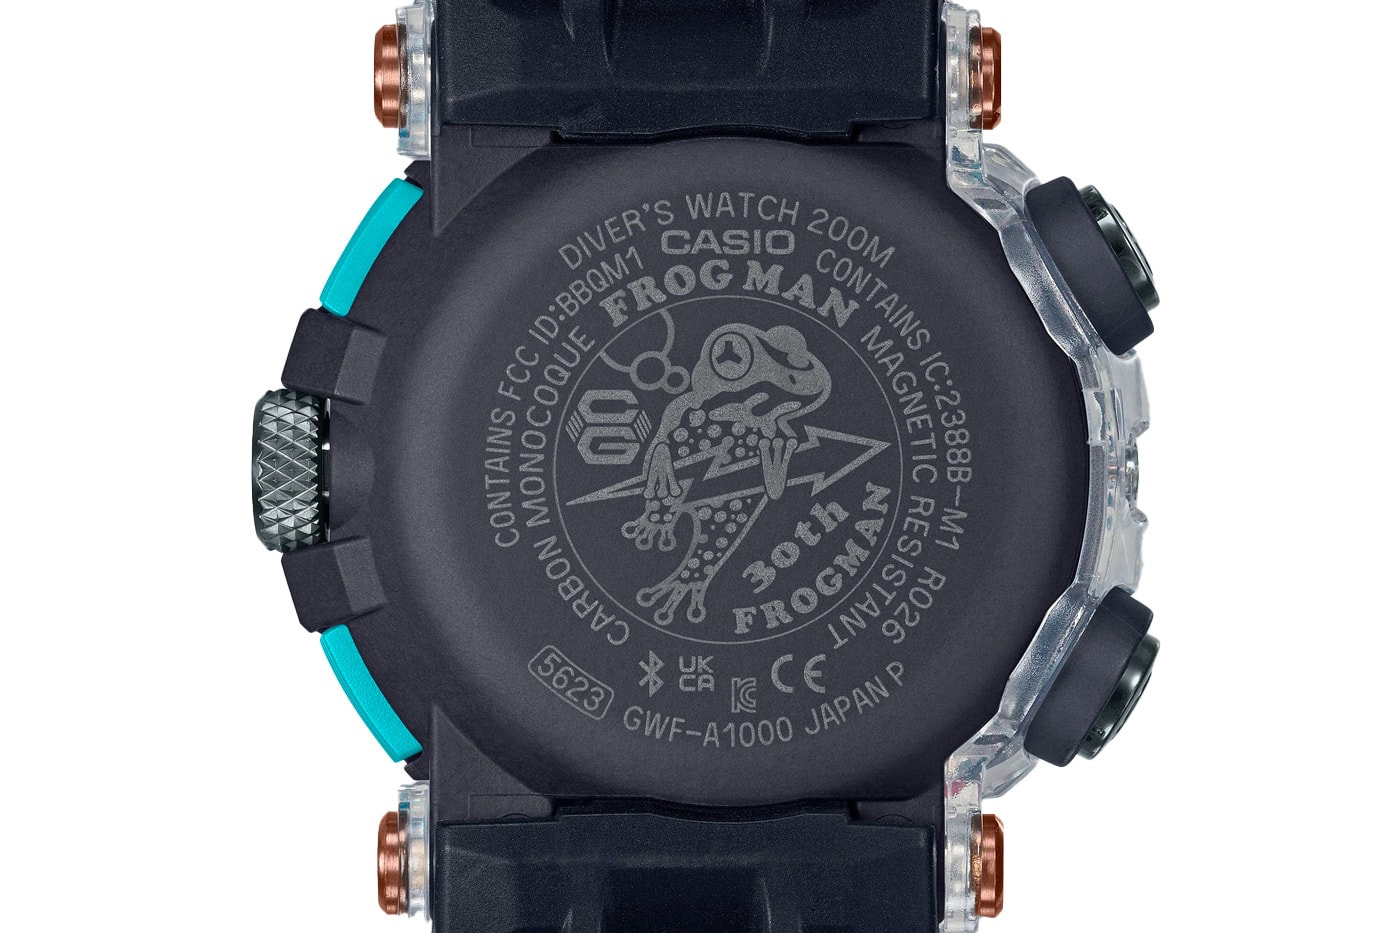 G-Shock Frogman GWF-A1000APF-1AJR Release Info